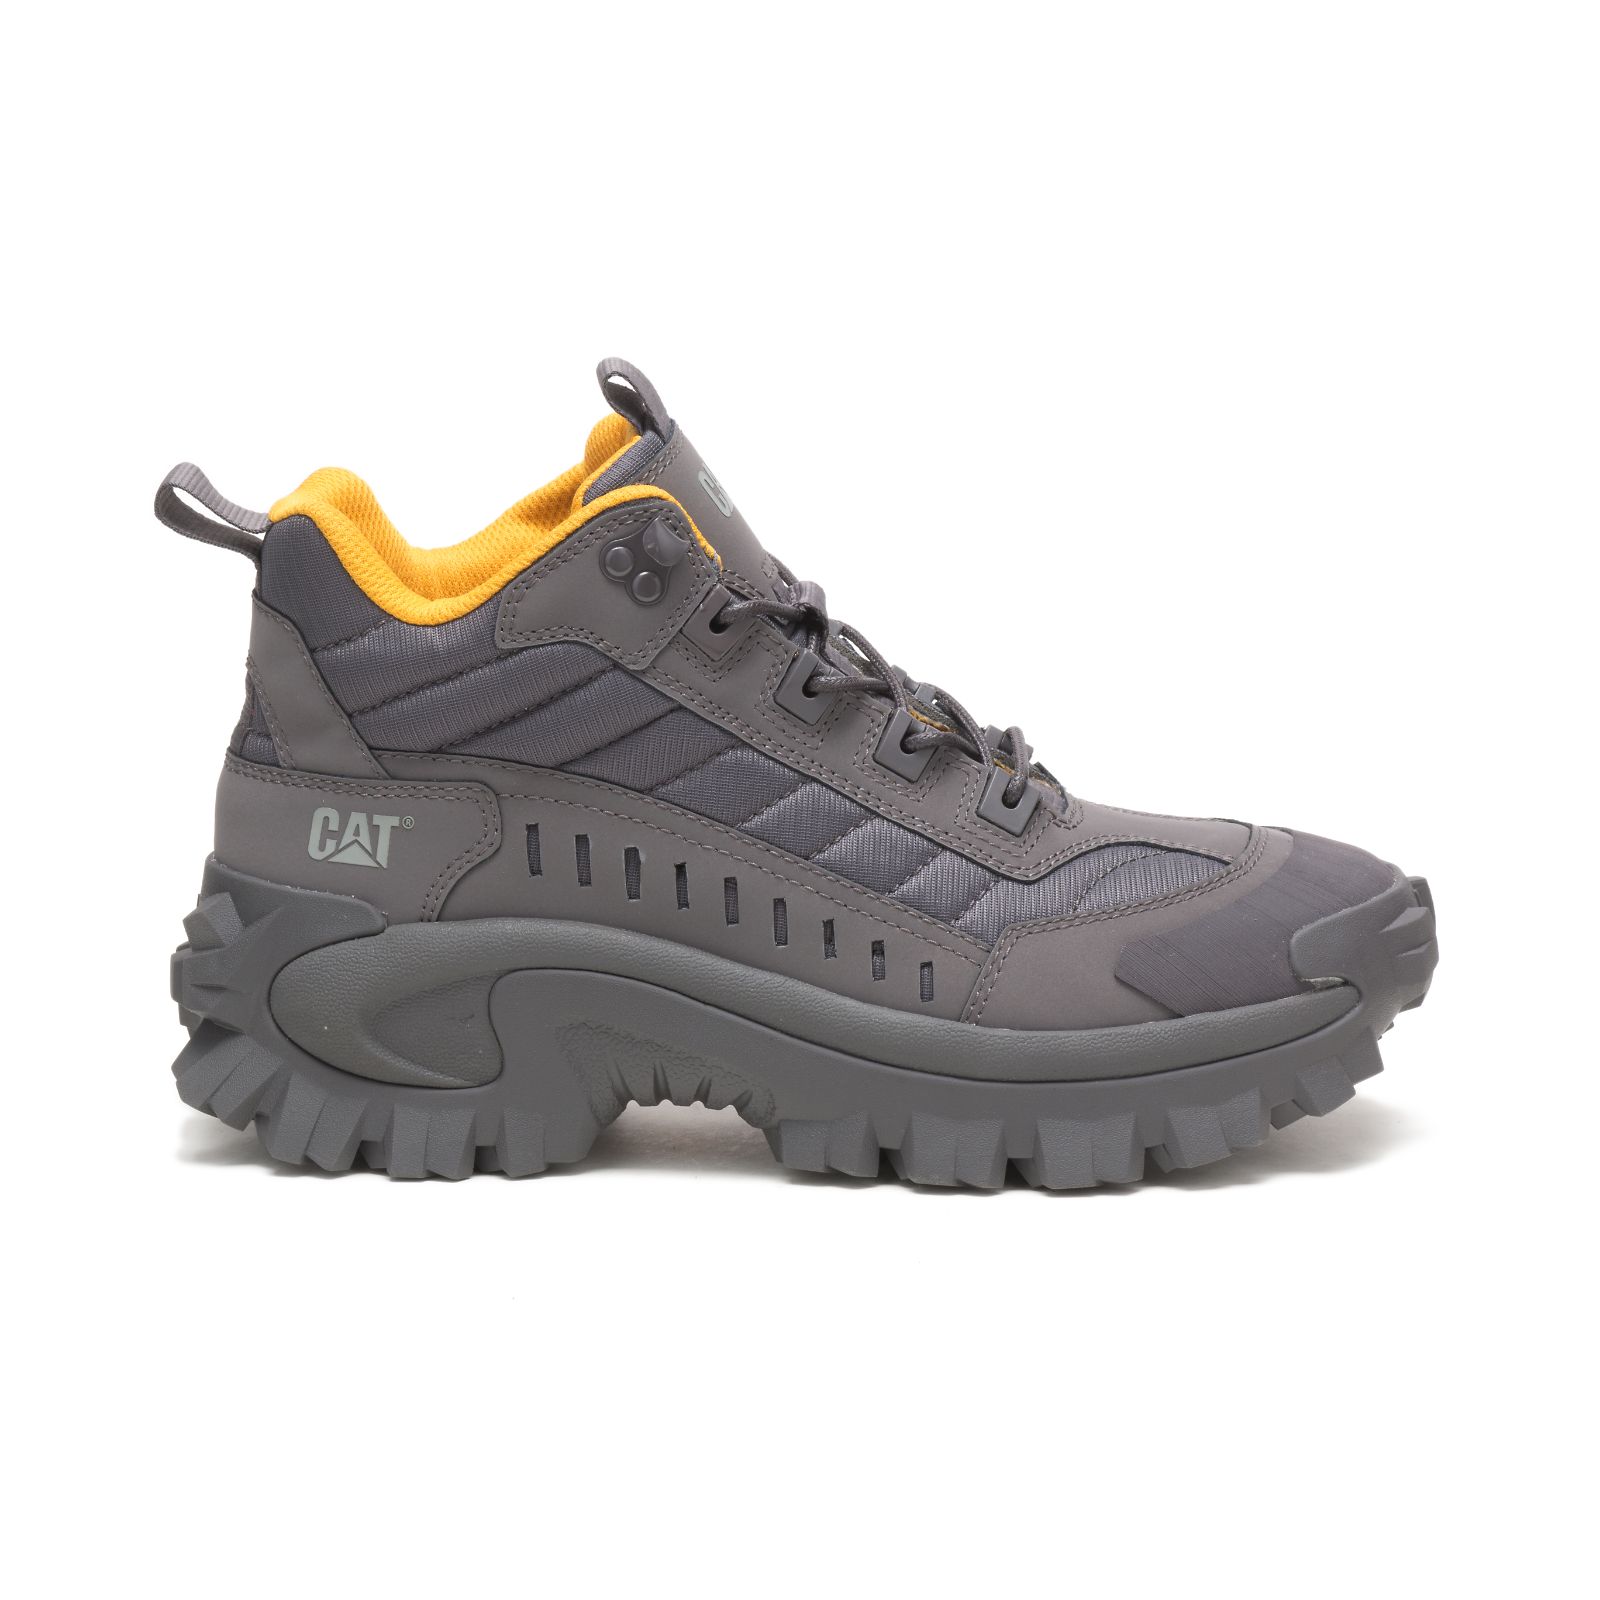 Caterpillar Sneakers Online UAE - Caterpillar Intruder Mid Mens - deep grey QOASYN321